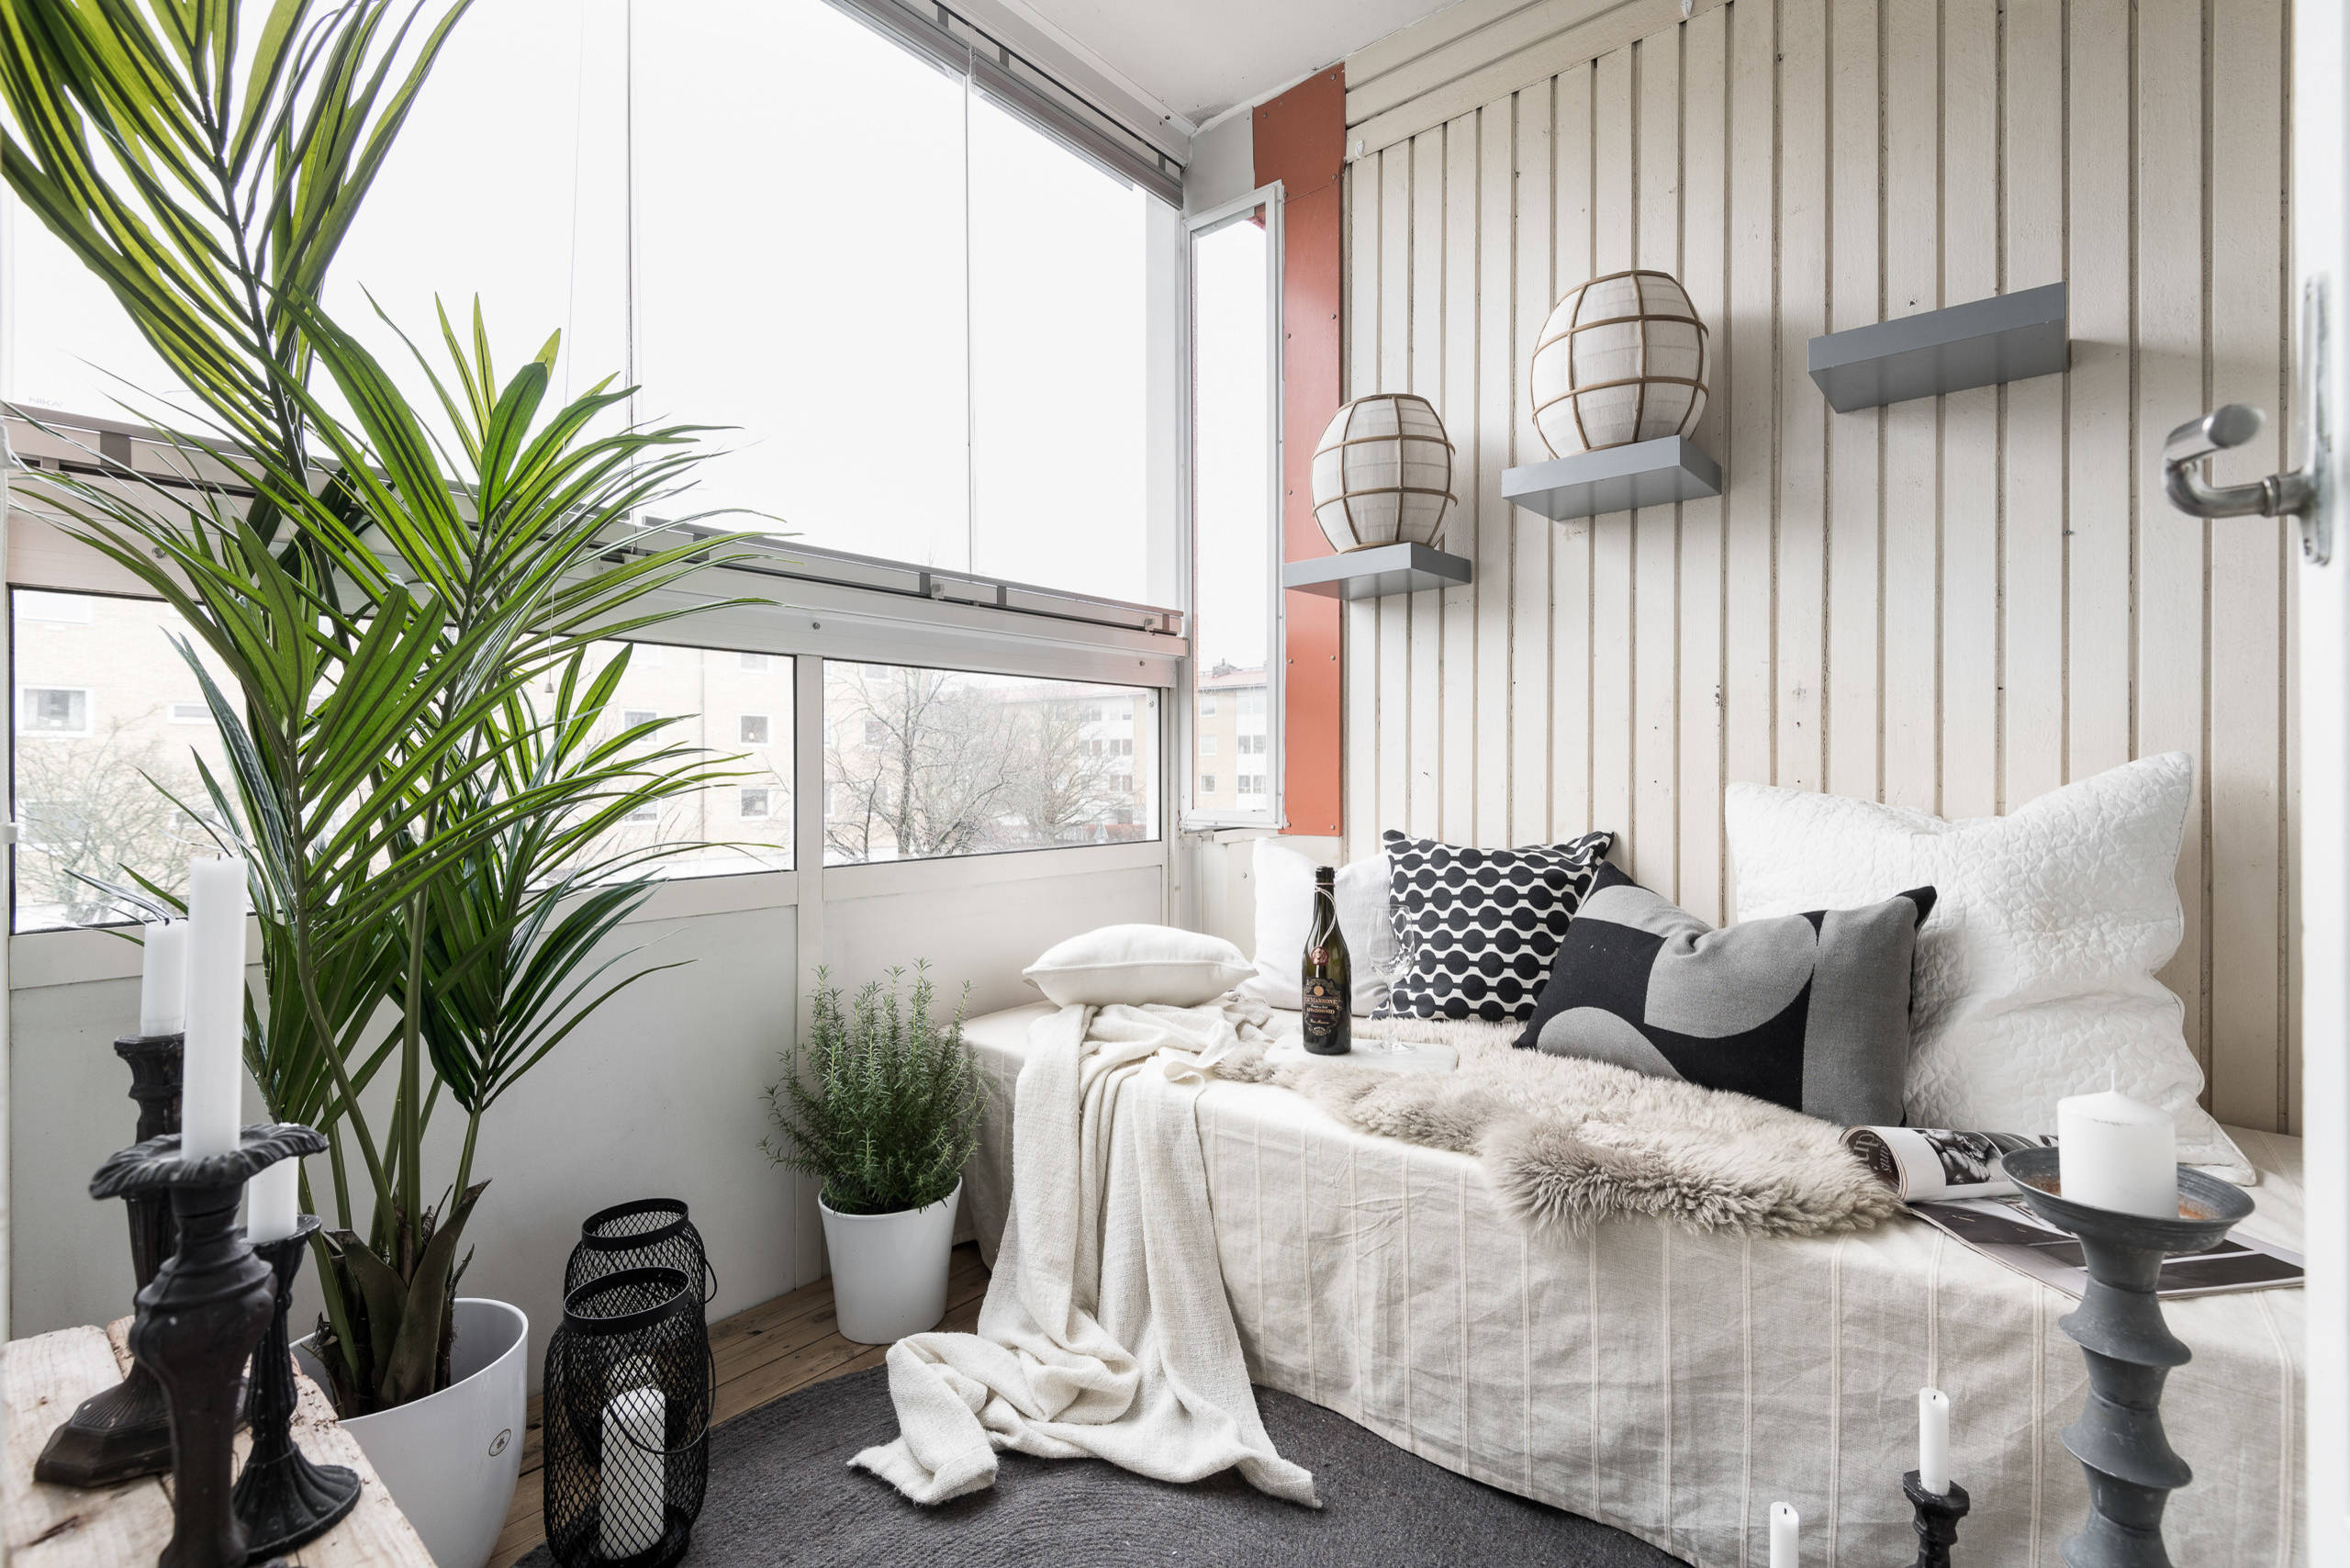 16 Cozy Scandinavian Sunroom Designs Perfect For The Winter